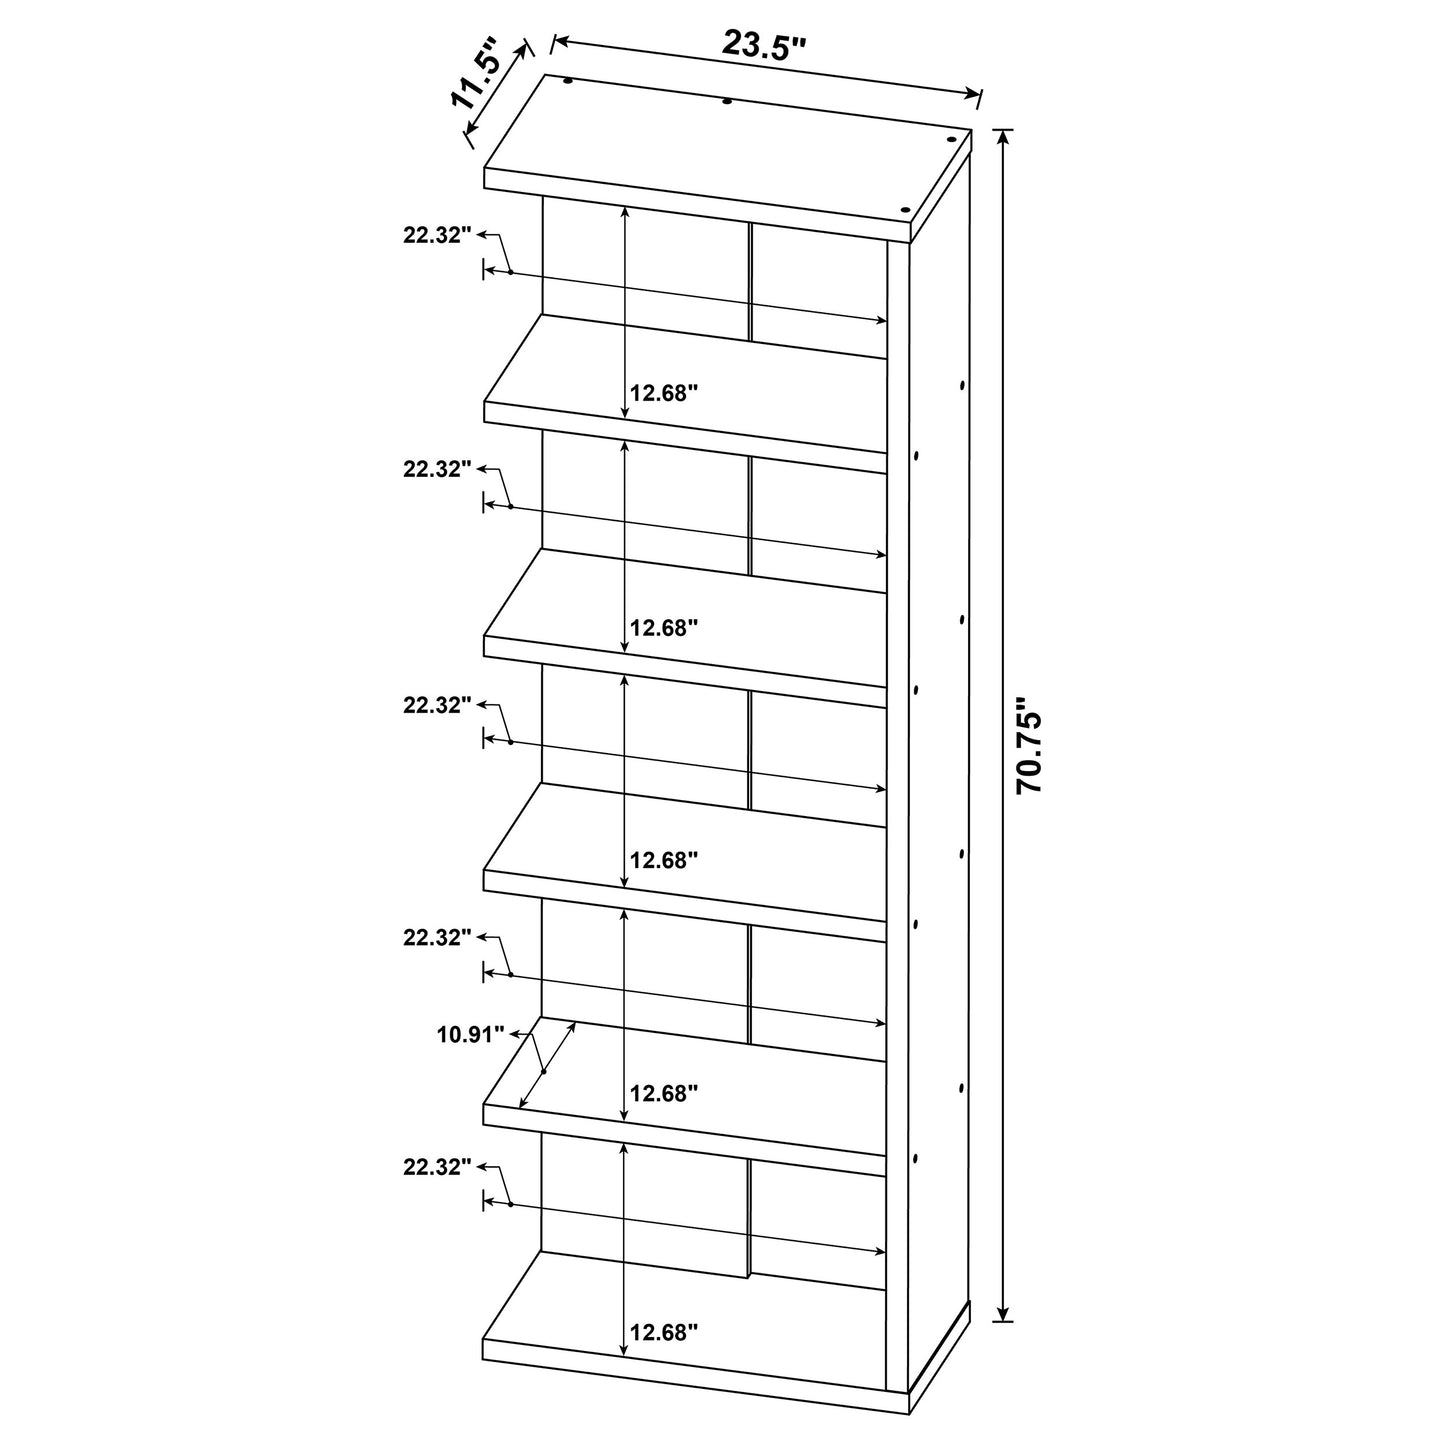 Harrison 5-tier Bookcase Weathered Grey